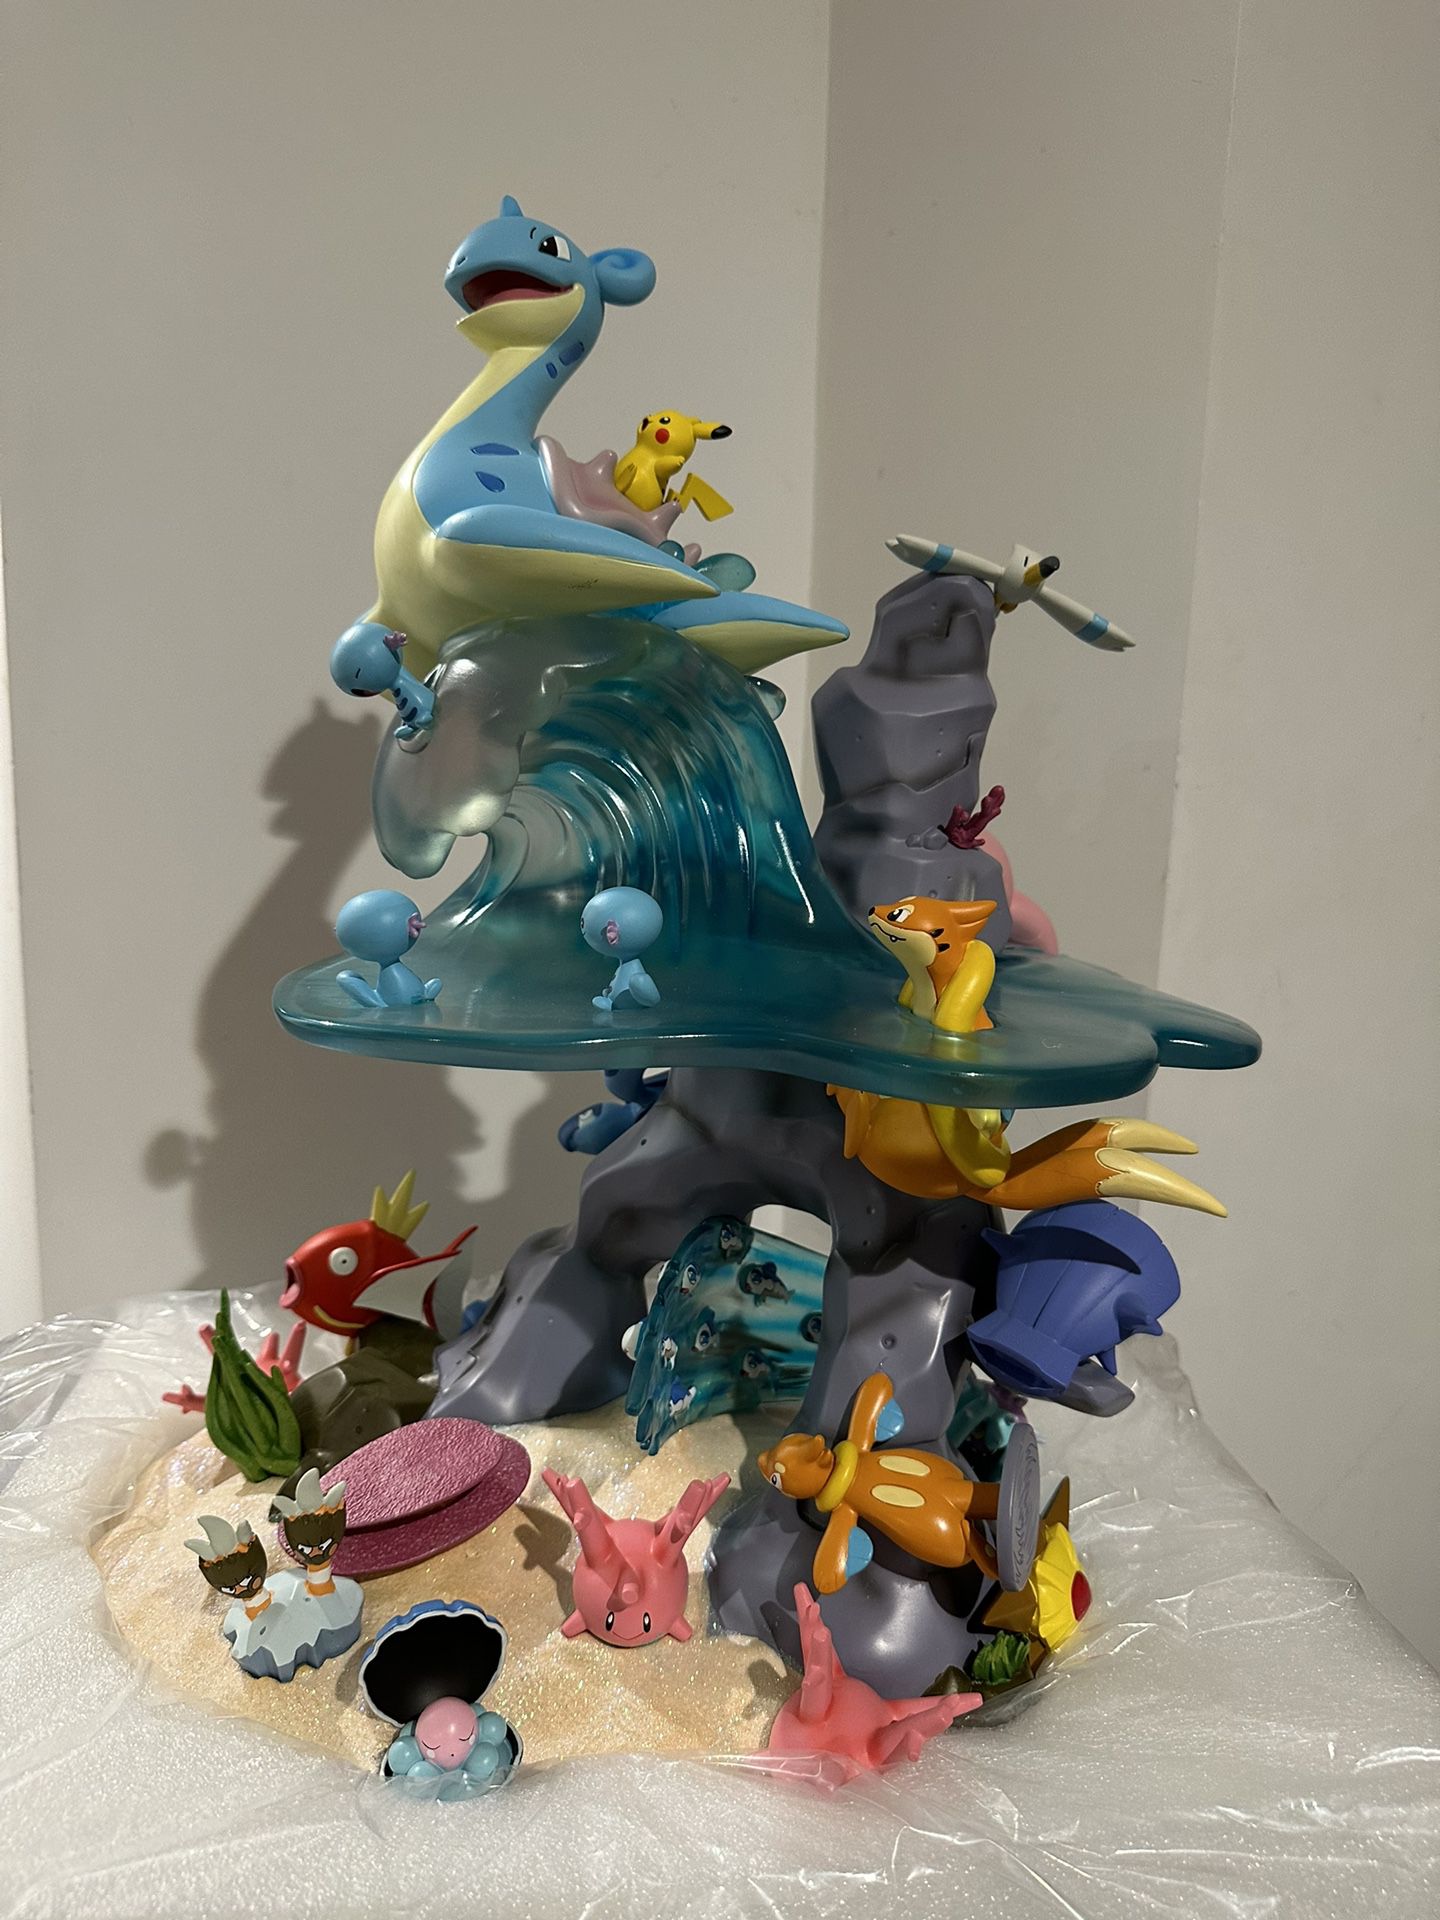 Pokémon Ocean of Friendship Collectible Figure (Brand New)